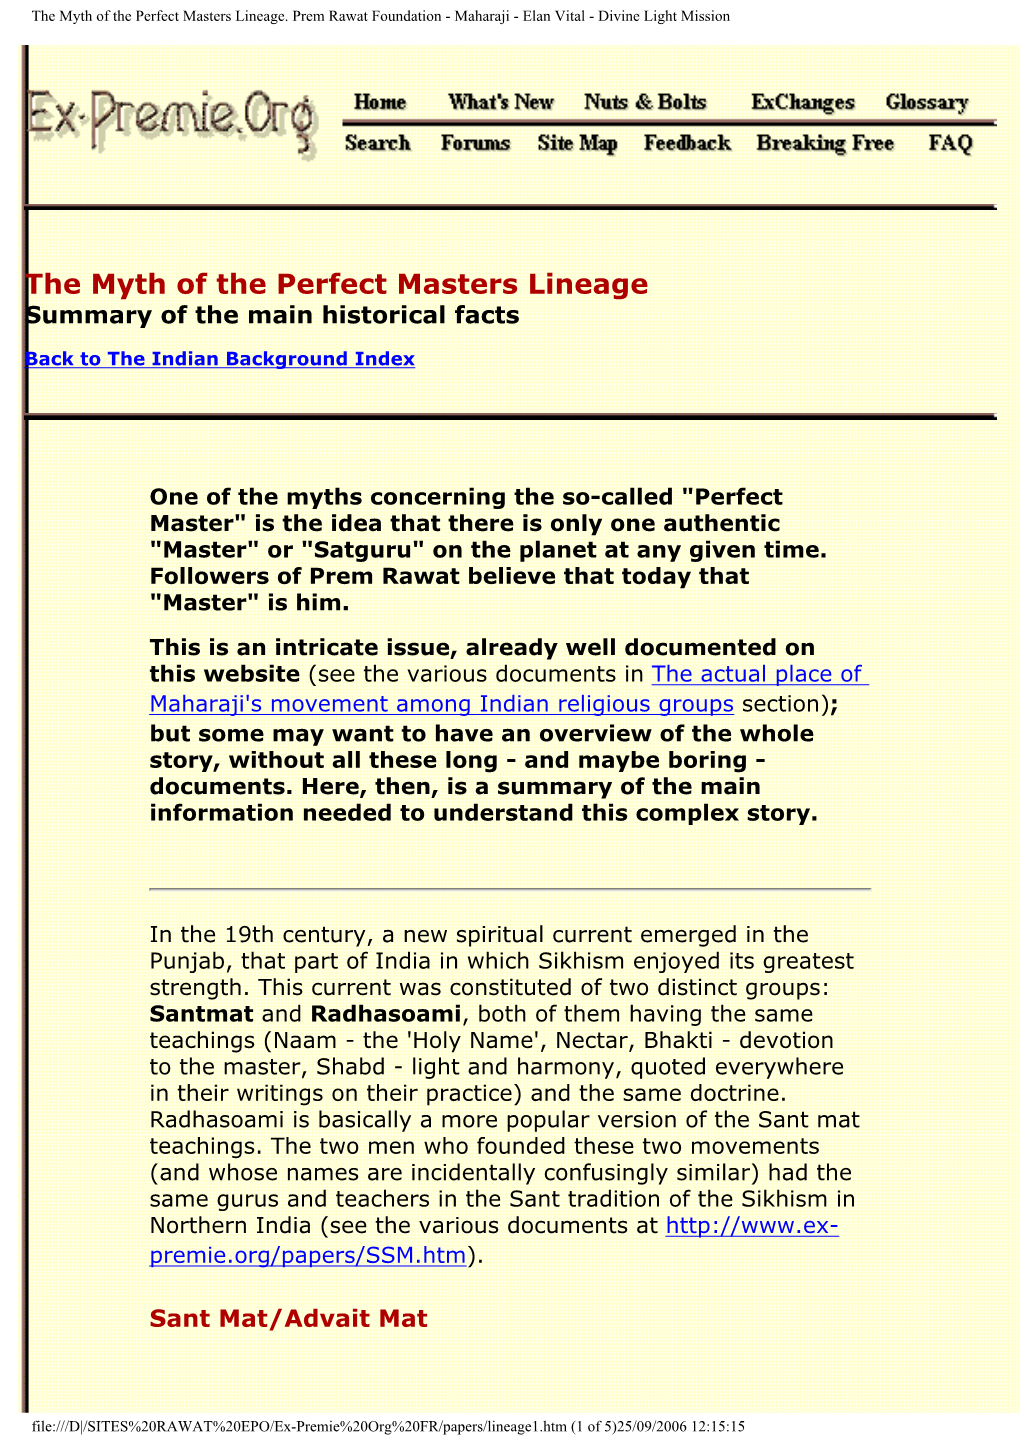 The Myth of the Perfect Masters Lineage. Prem Rawat Foundation - Maharaji - Elan Vital - Divine Light Mission